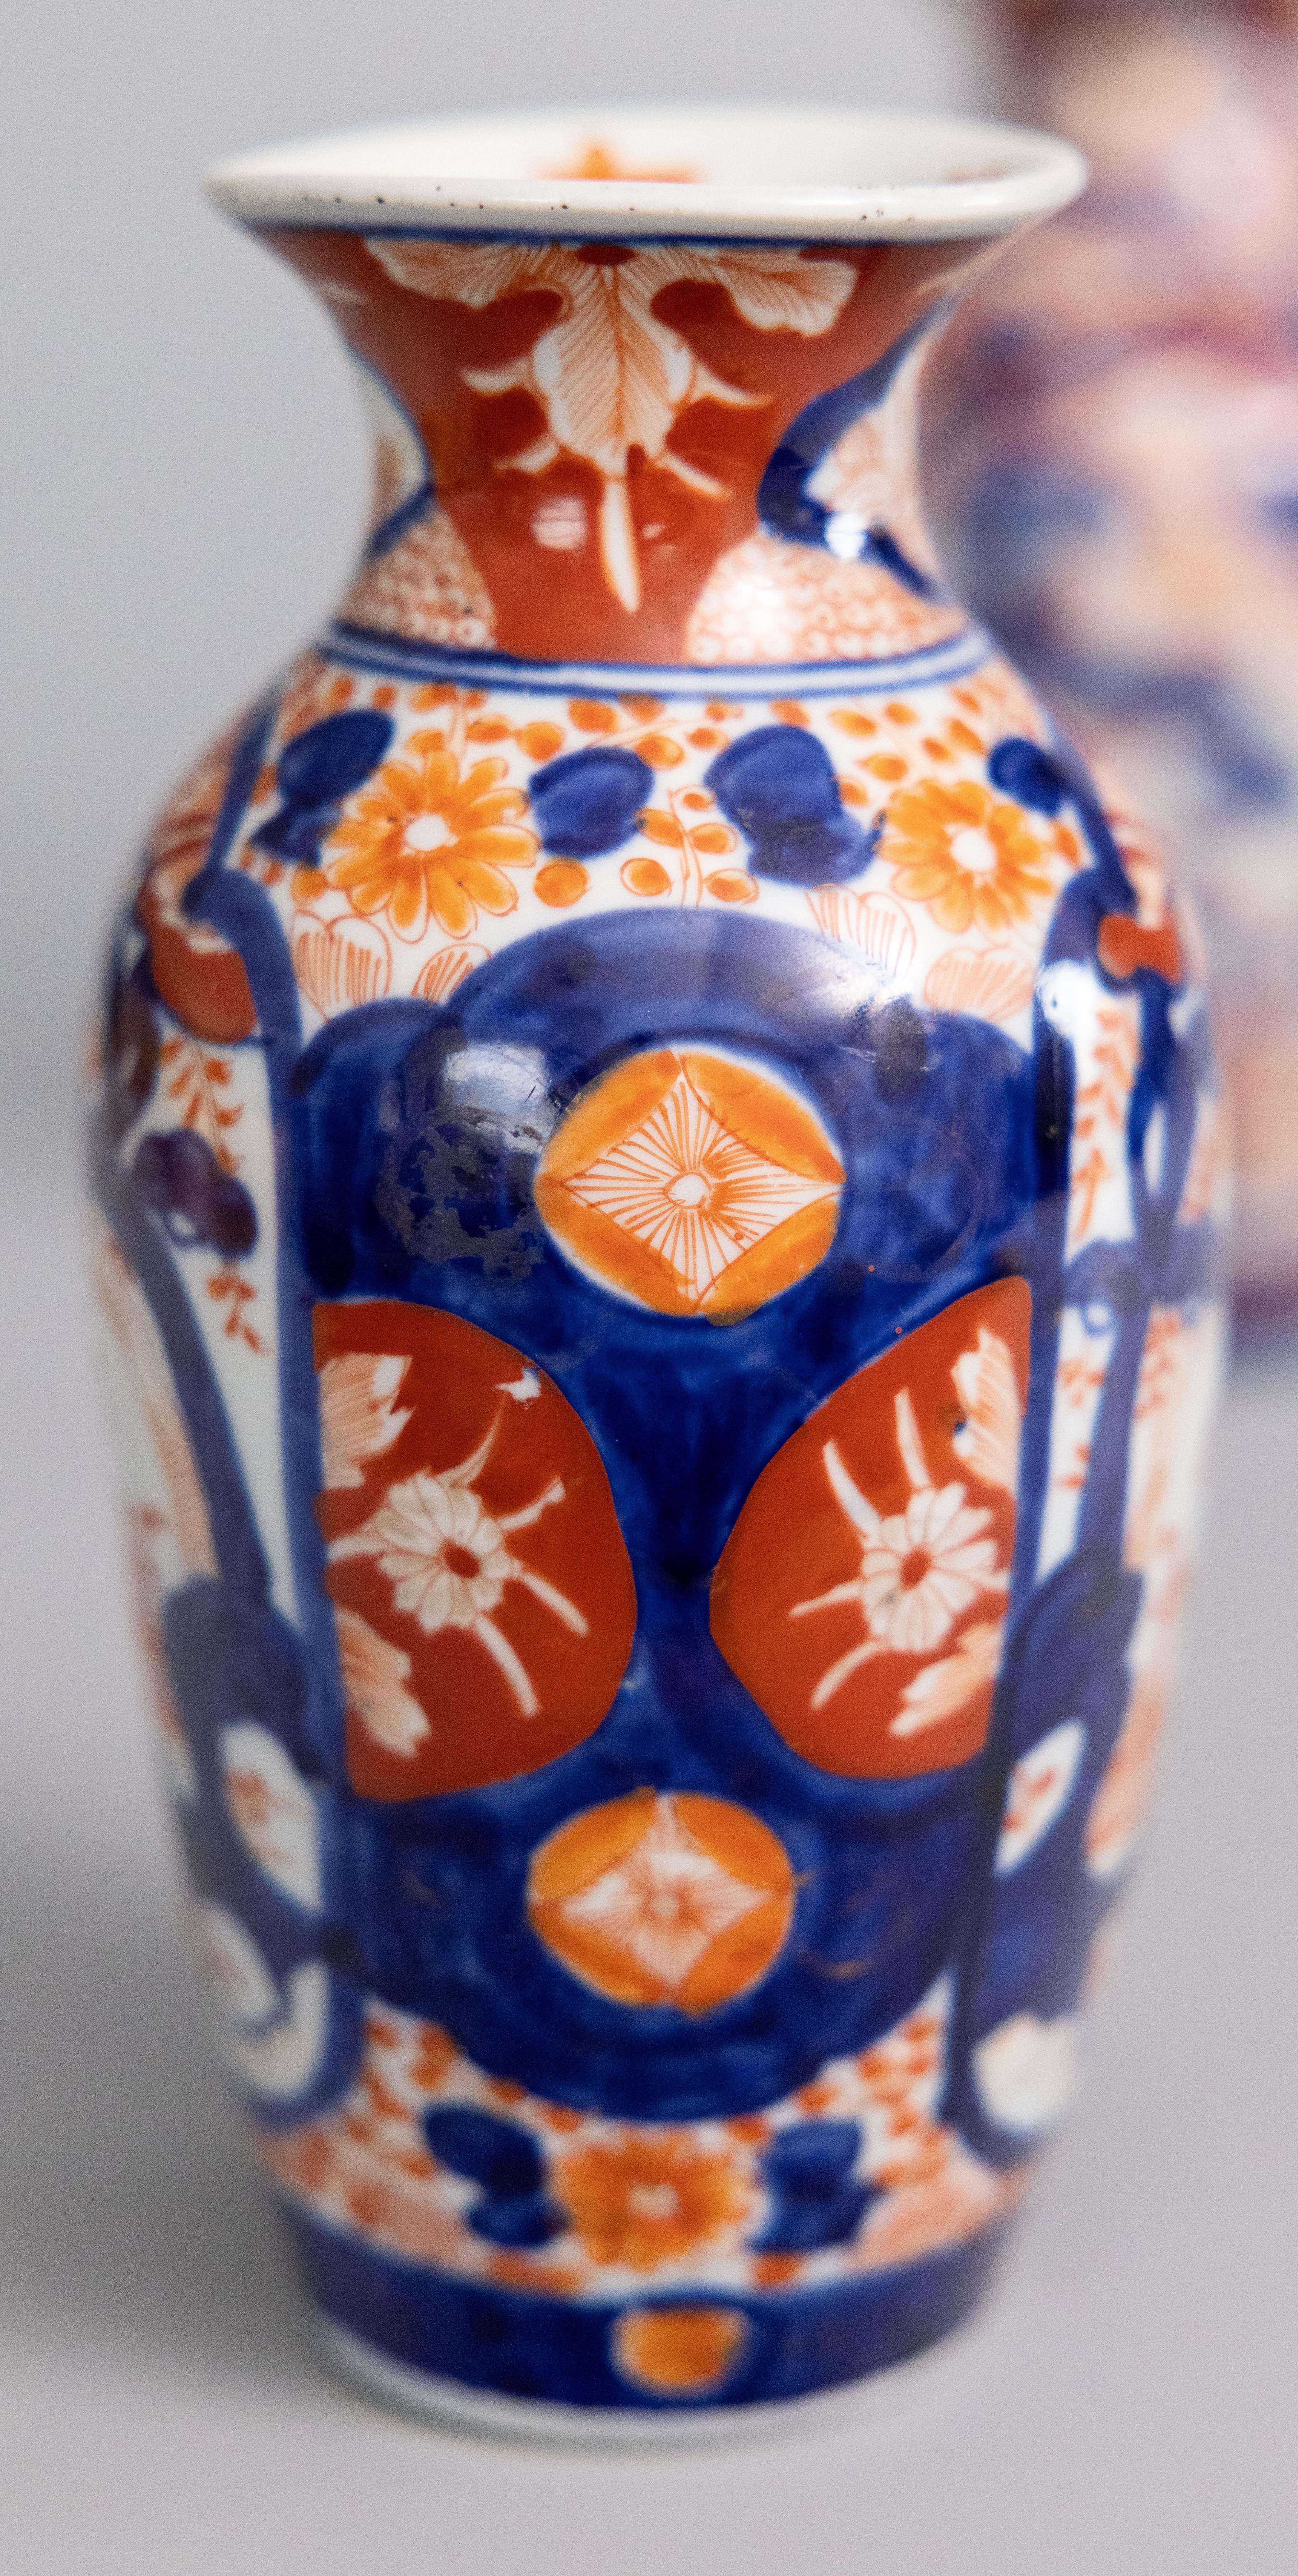 Antique 19th Century Japanese Imari Porcelain Vases - a Pair For Sale 1